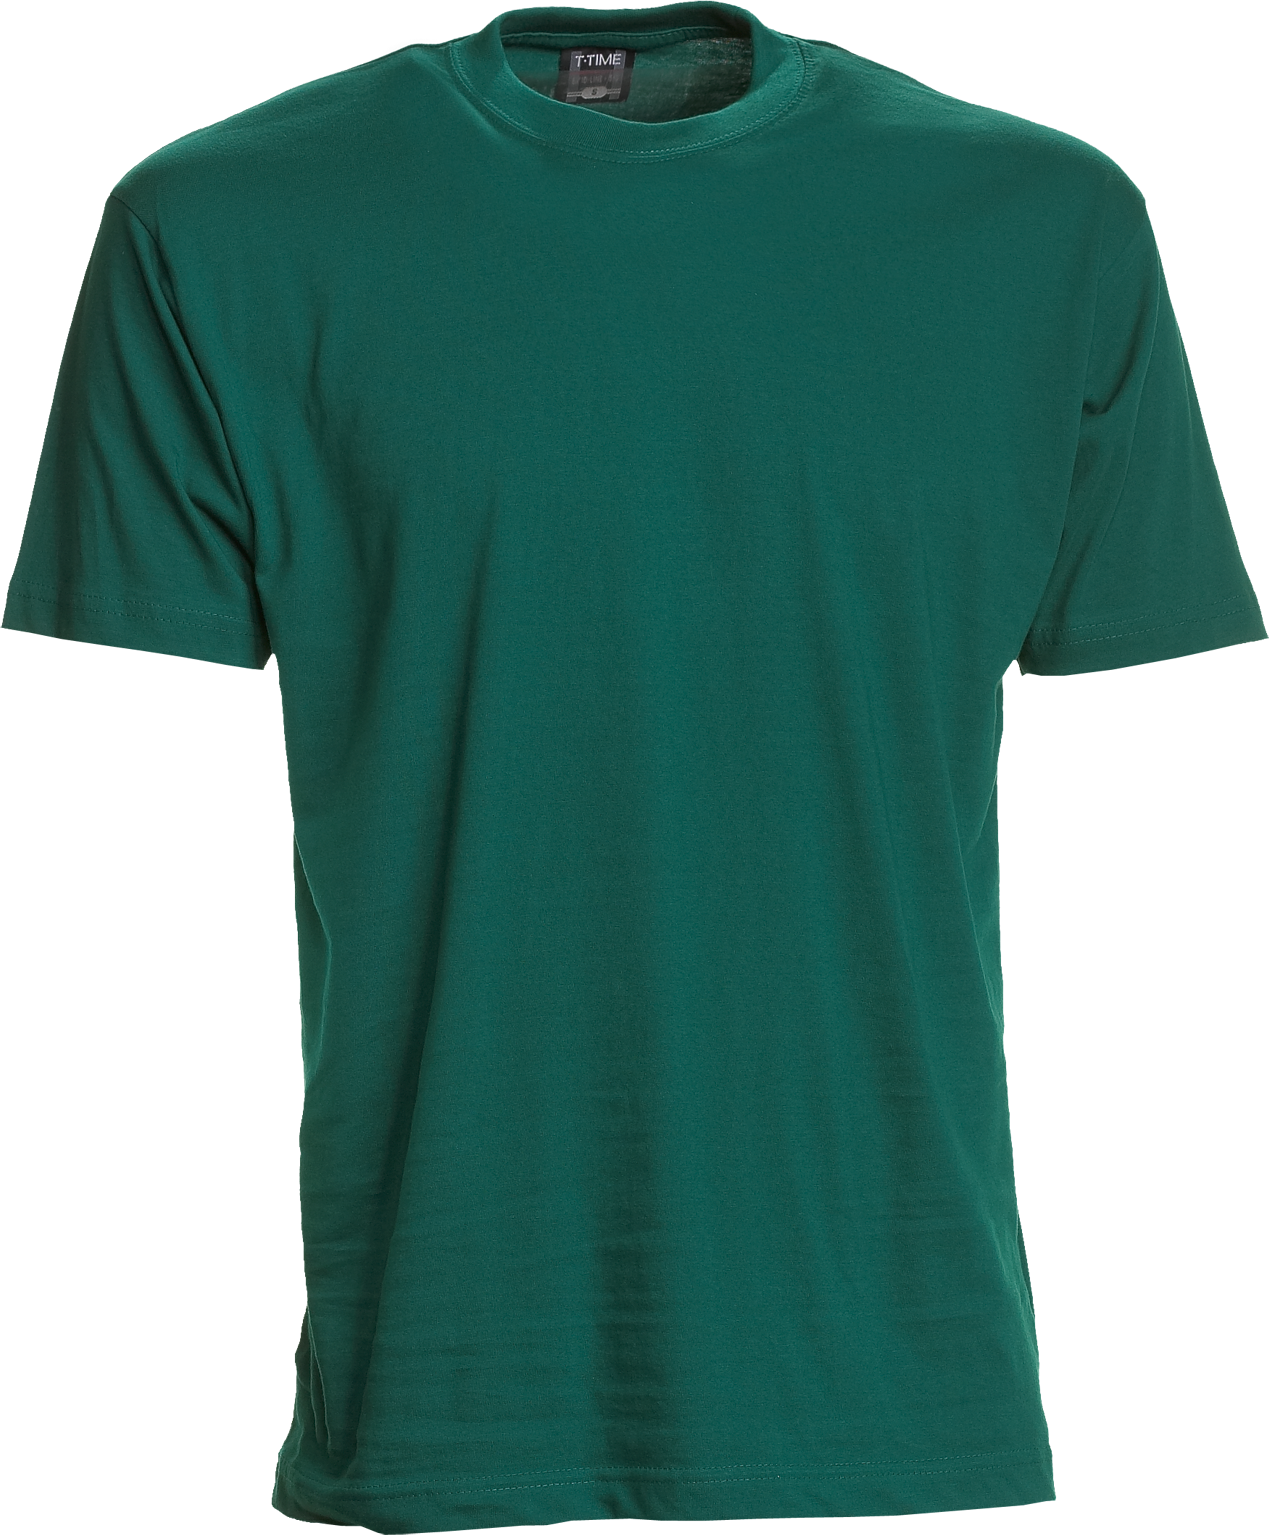 Grün Herren T-Shirt, Basic (8150101)